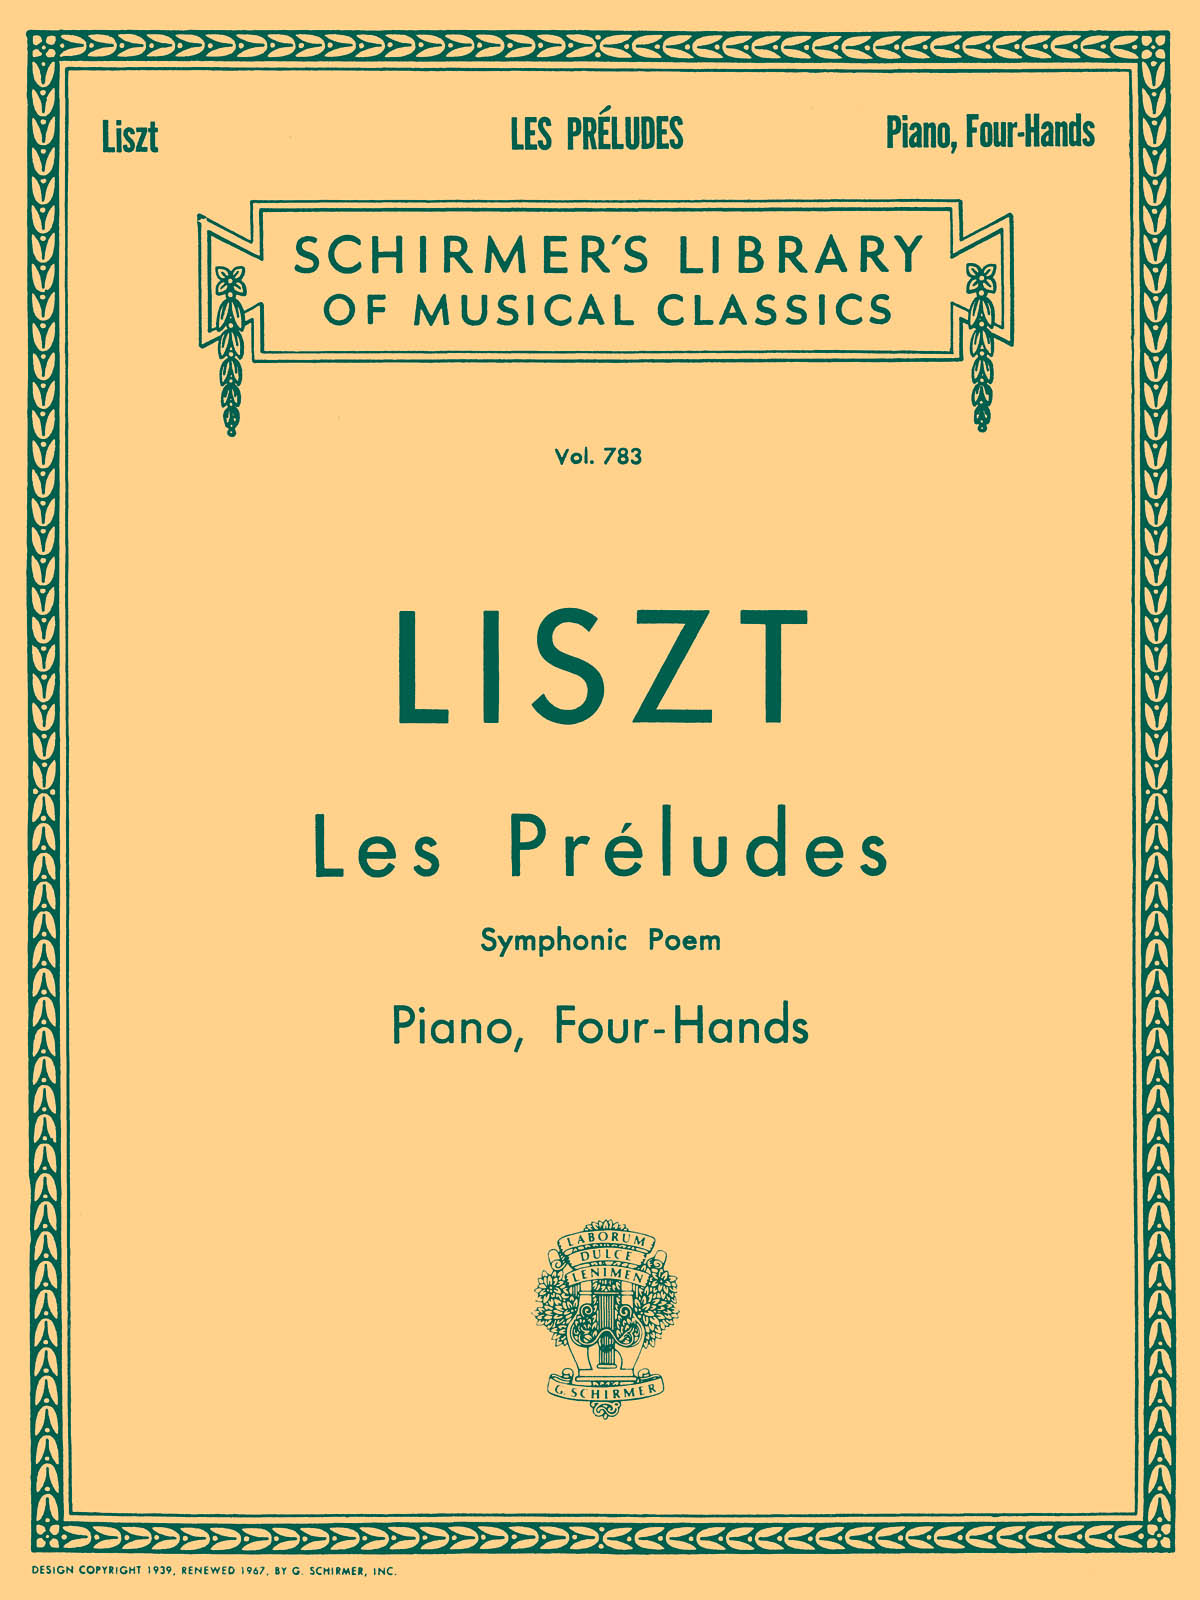 Franz Liszt: Les Preludes